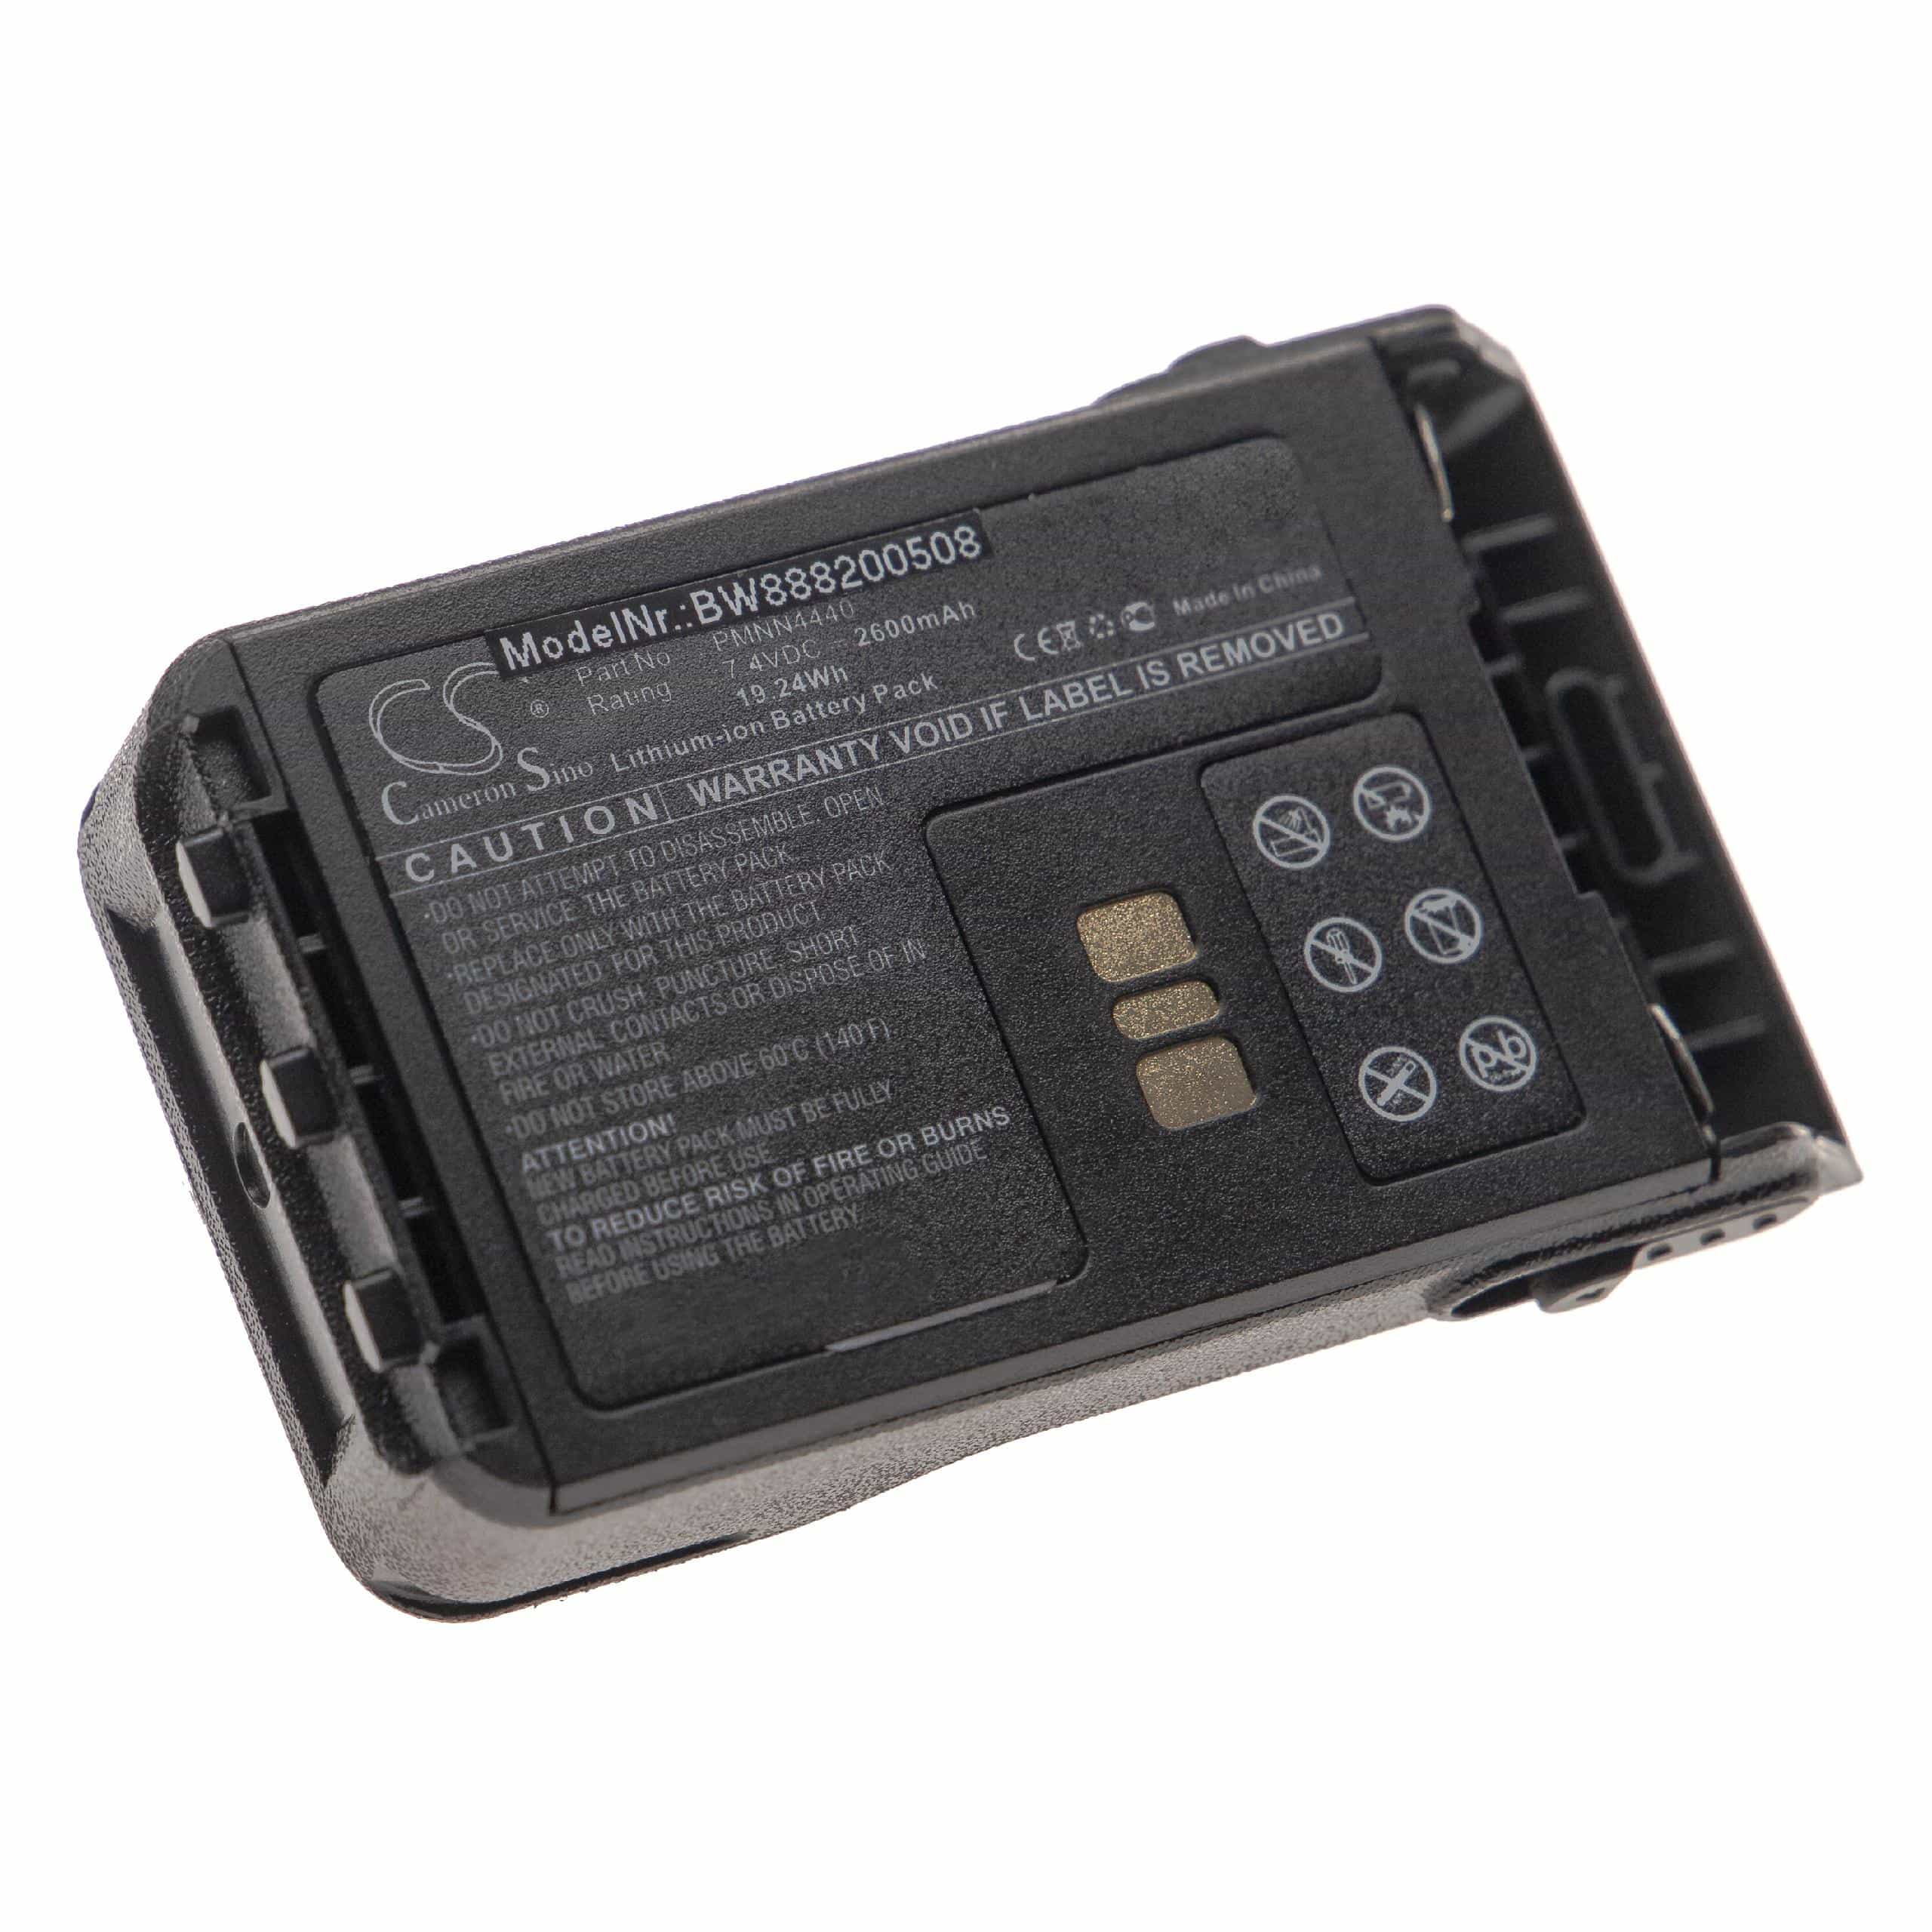 Batterie remplace Motorola PMNN4440, PMNN4502A, PMNN4440AR pour radio talkie-walkie - 2600mAh 7,4V Li-ion